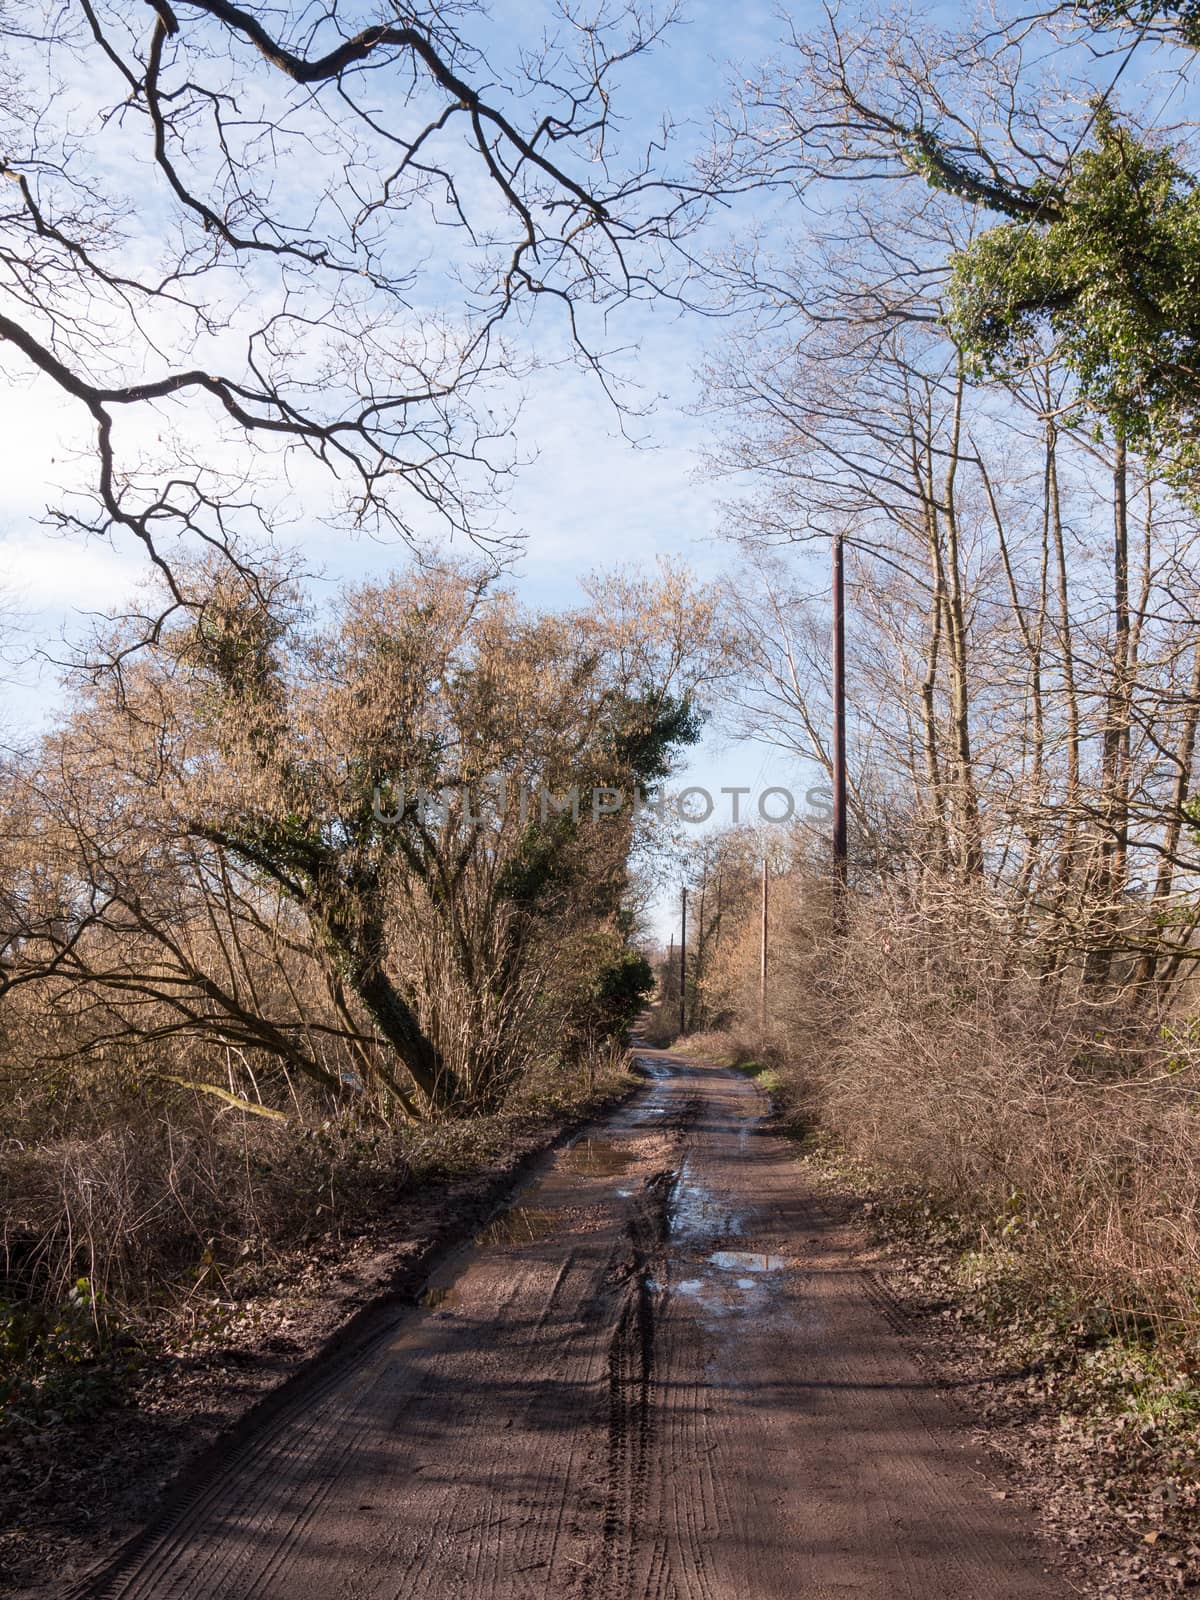 muddy path through countryside spring farm land tracks trees; essex; england; uk